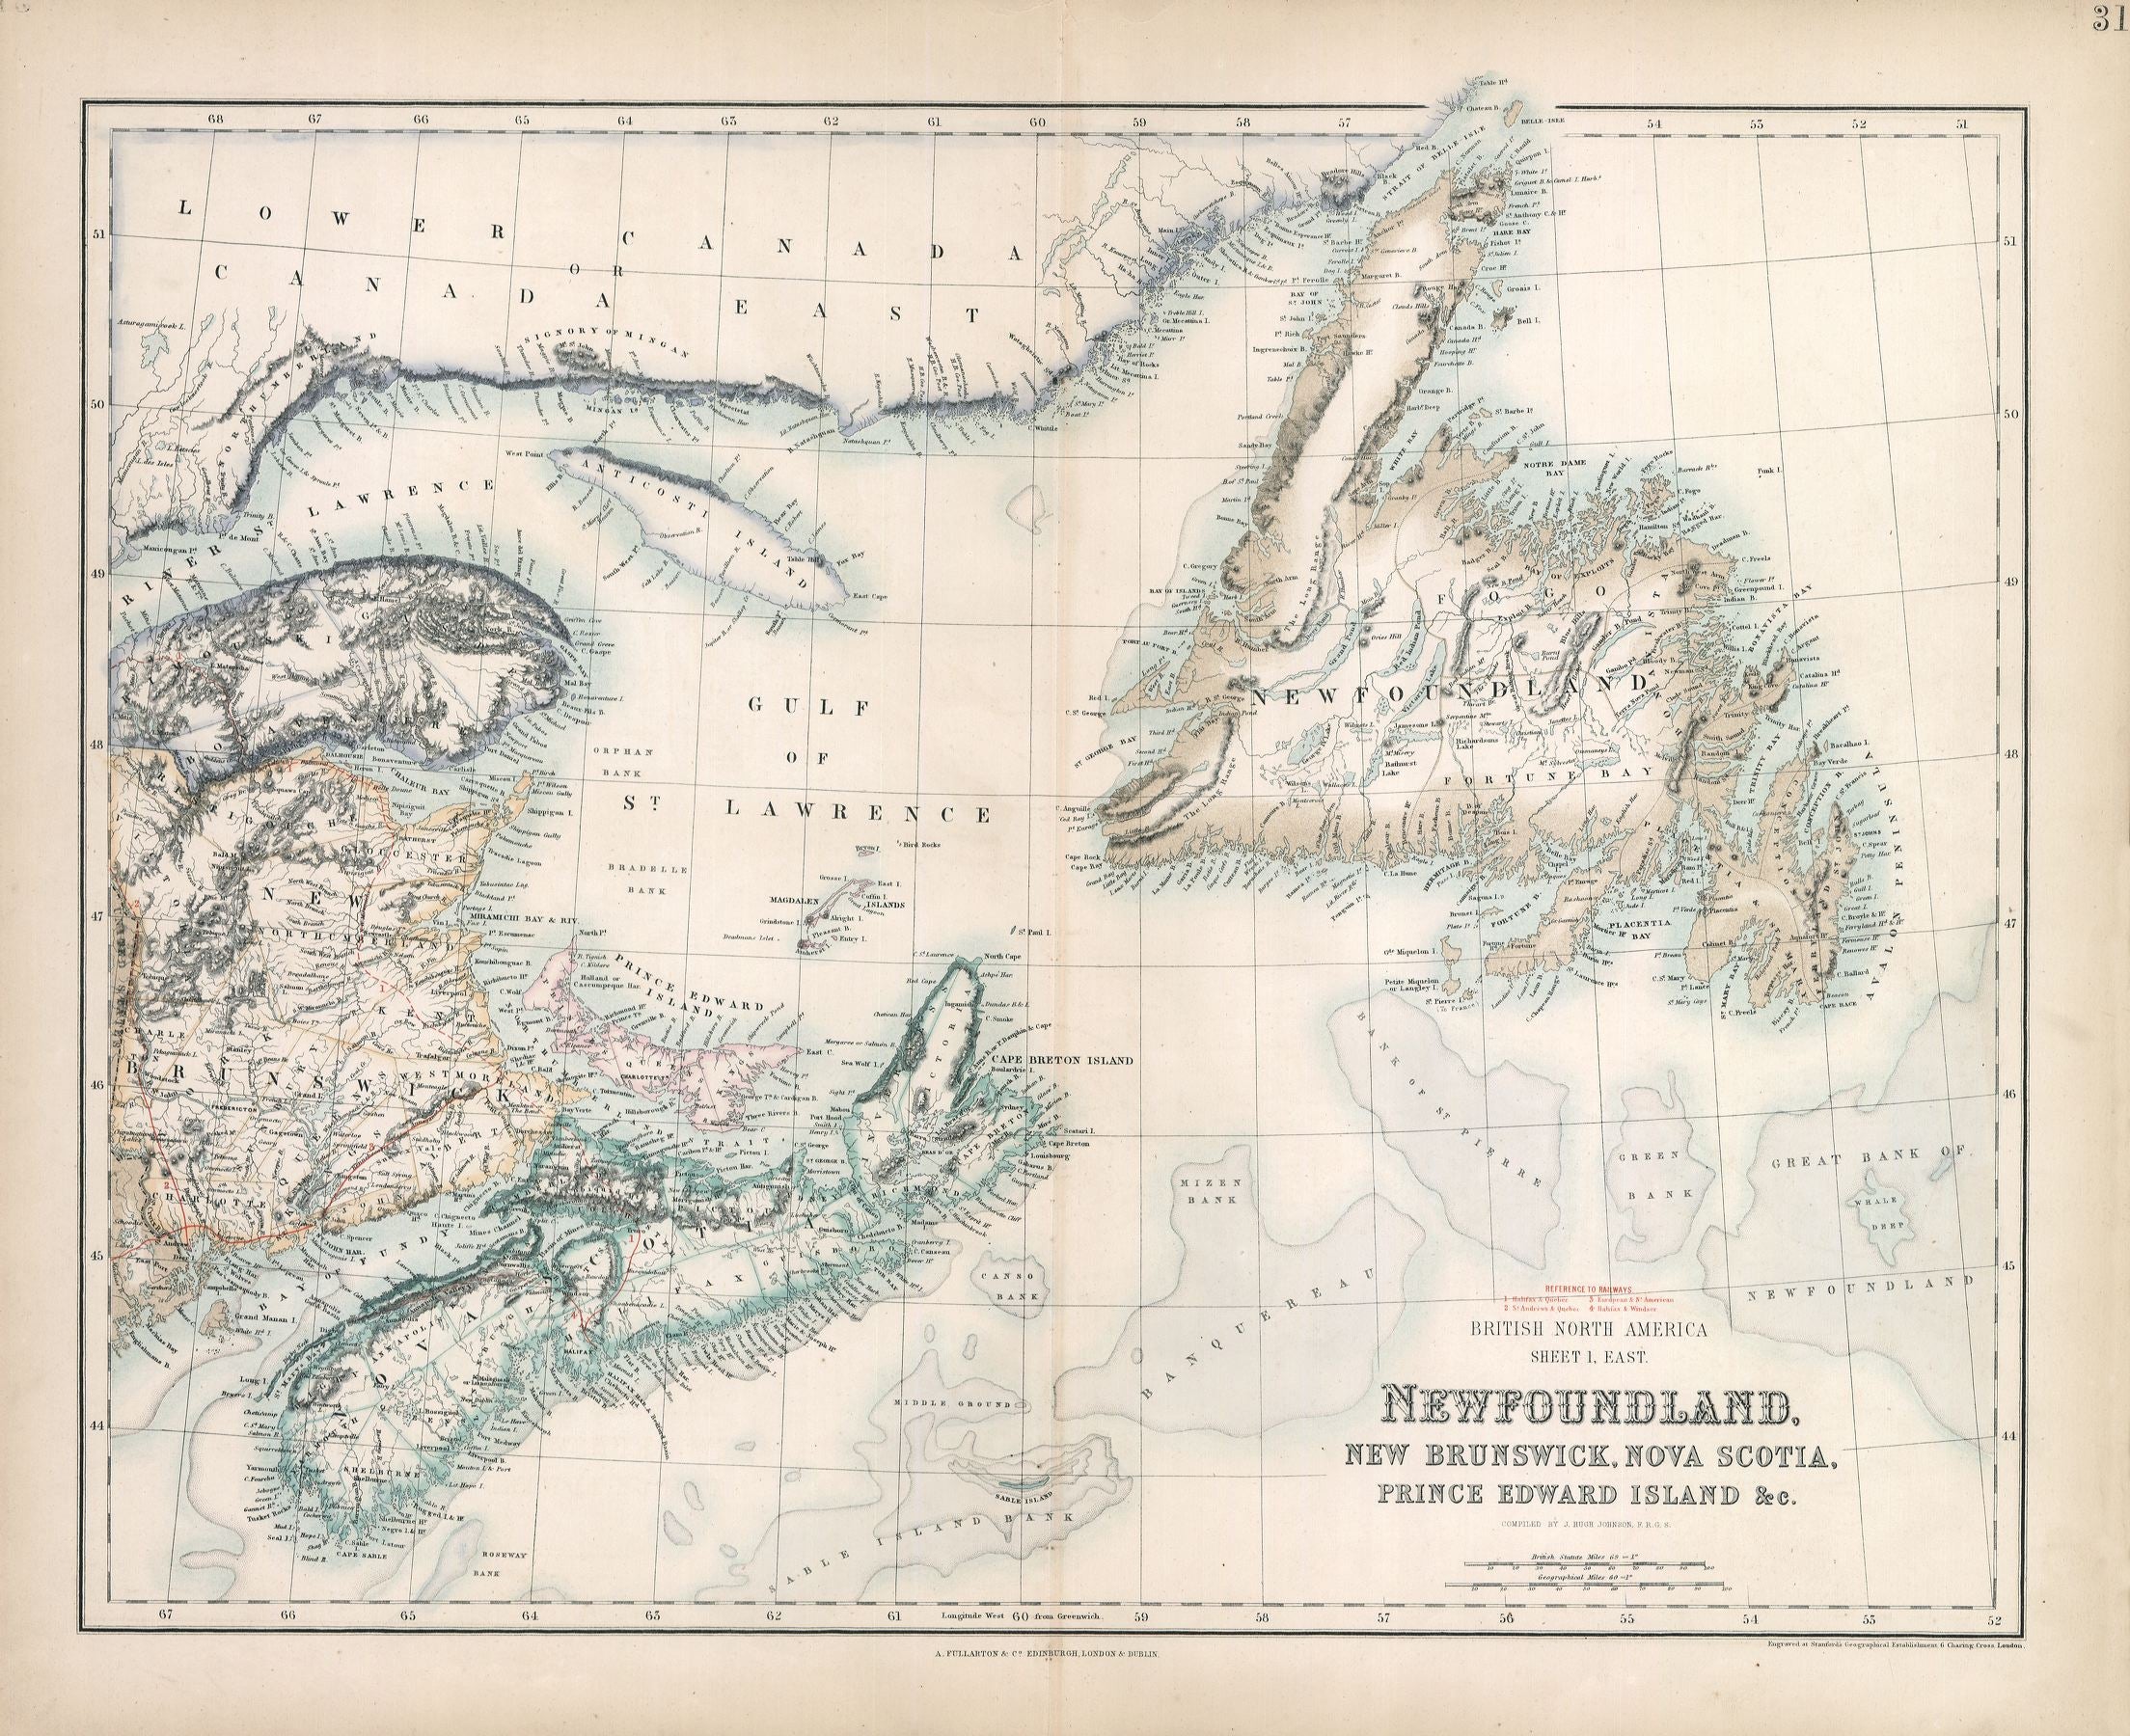 R2647  Fullarton, Archibald: British North America sheet I. East. Newfoundland, New Brunswick, Nova Scotia, Prince Edward Island & c. 1874